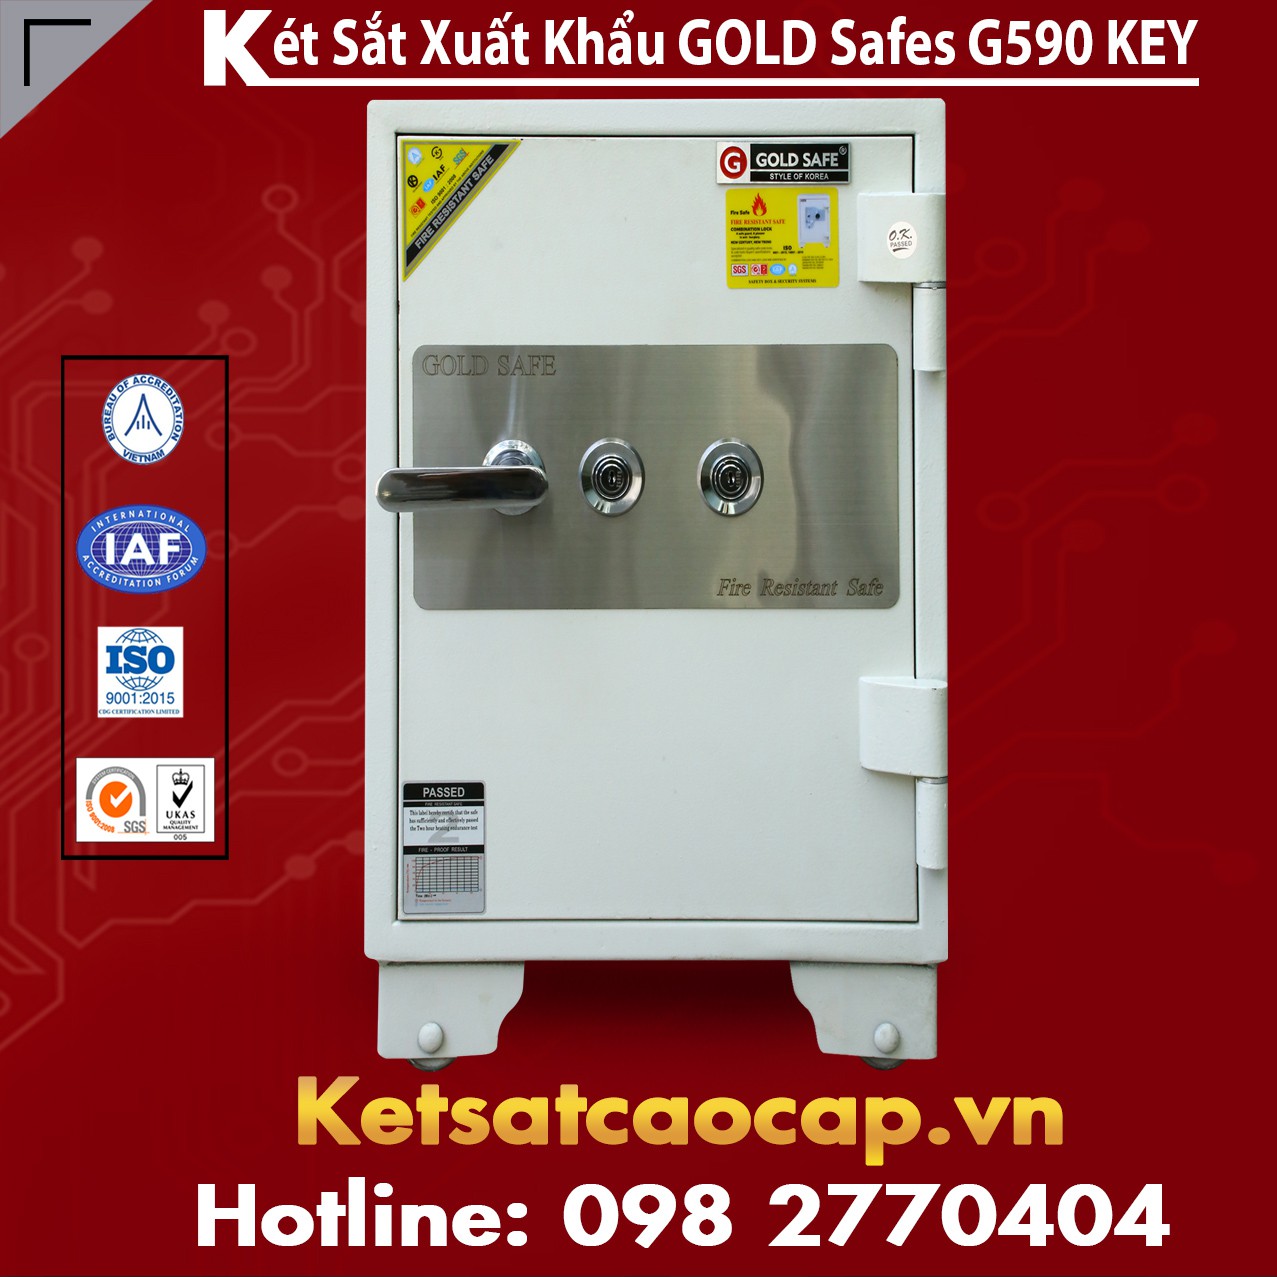 Két Sắt Đại Gia GOLD SAFES G590 KEY